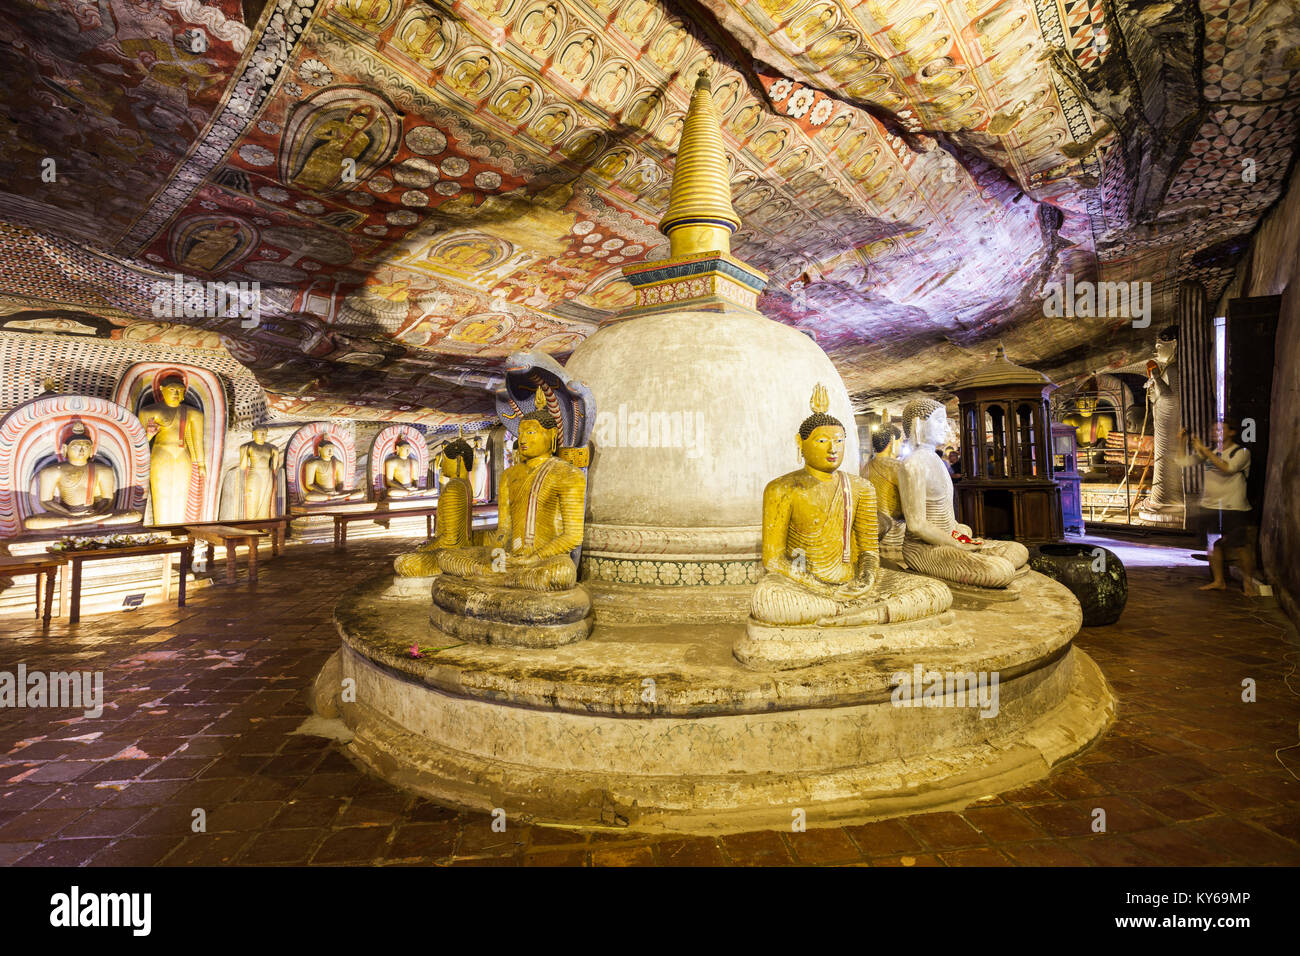 DAMBULLA, SRI LANKA - FEBRUARY 17, 2017: Stupa or dagoba and Buddha statues inside Dambulla Cave Temple. Cave Temple is a World Heritage Site near Dam Stock Photo